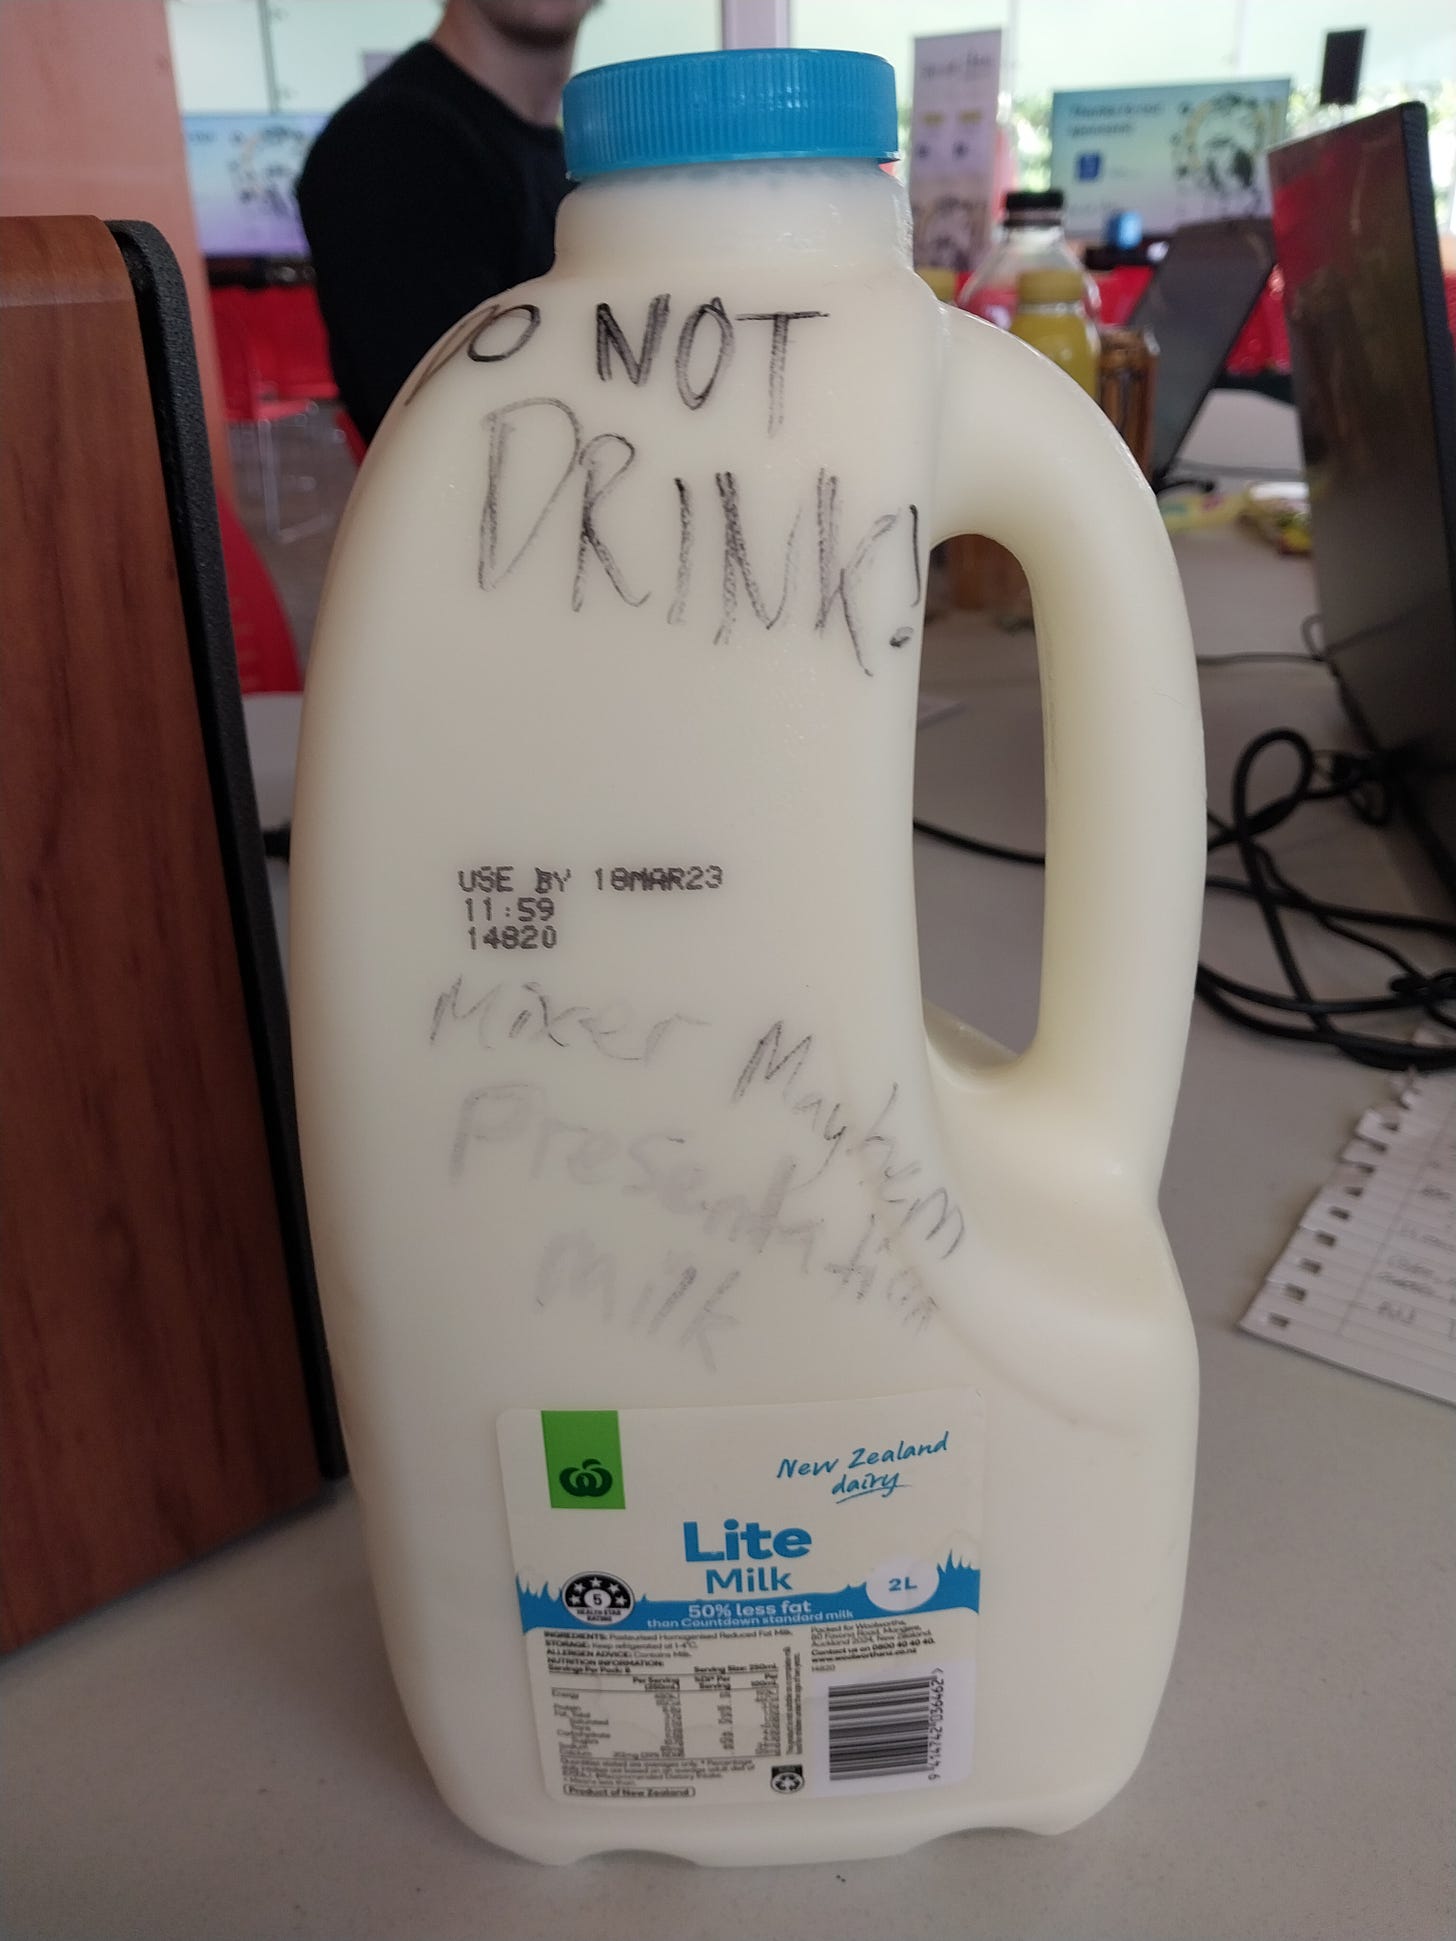 A milk bottle reading "DO NOT DRINK! Mixer Mayhem presentation milk."